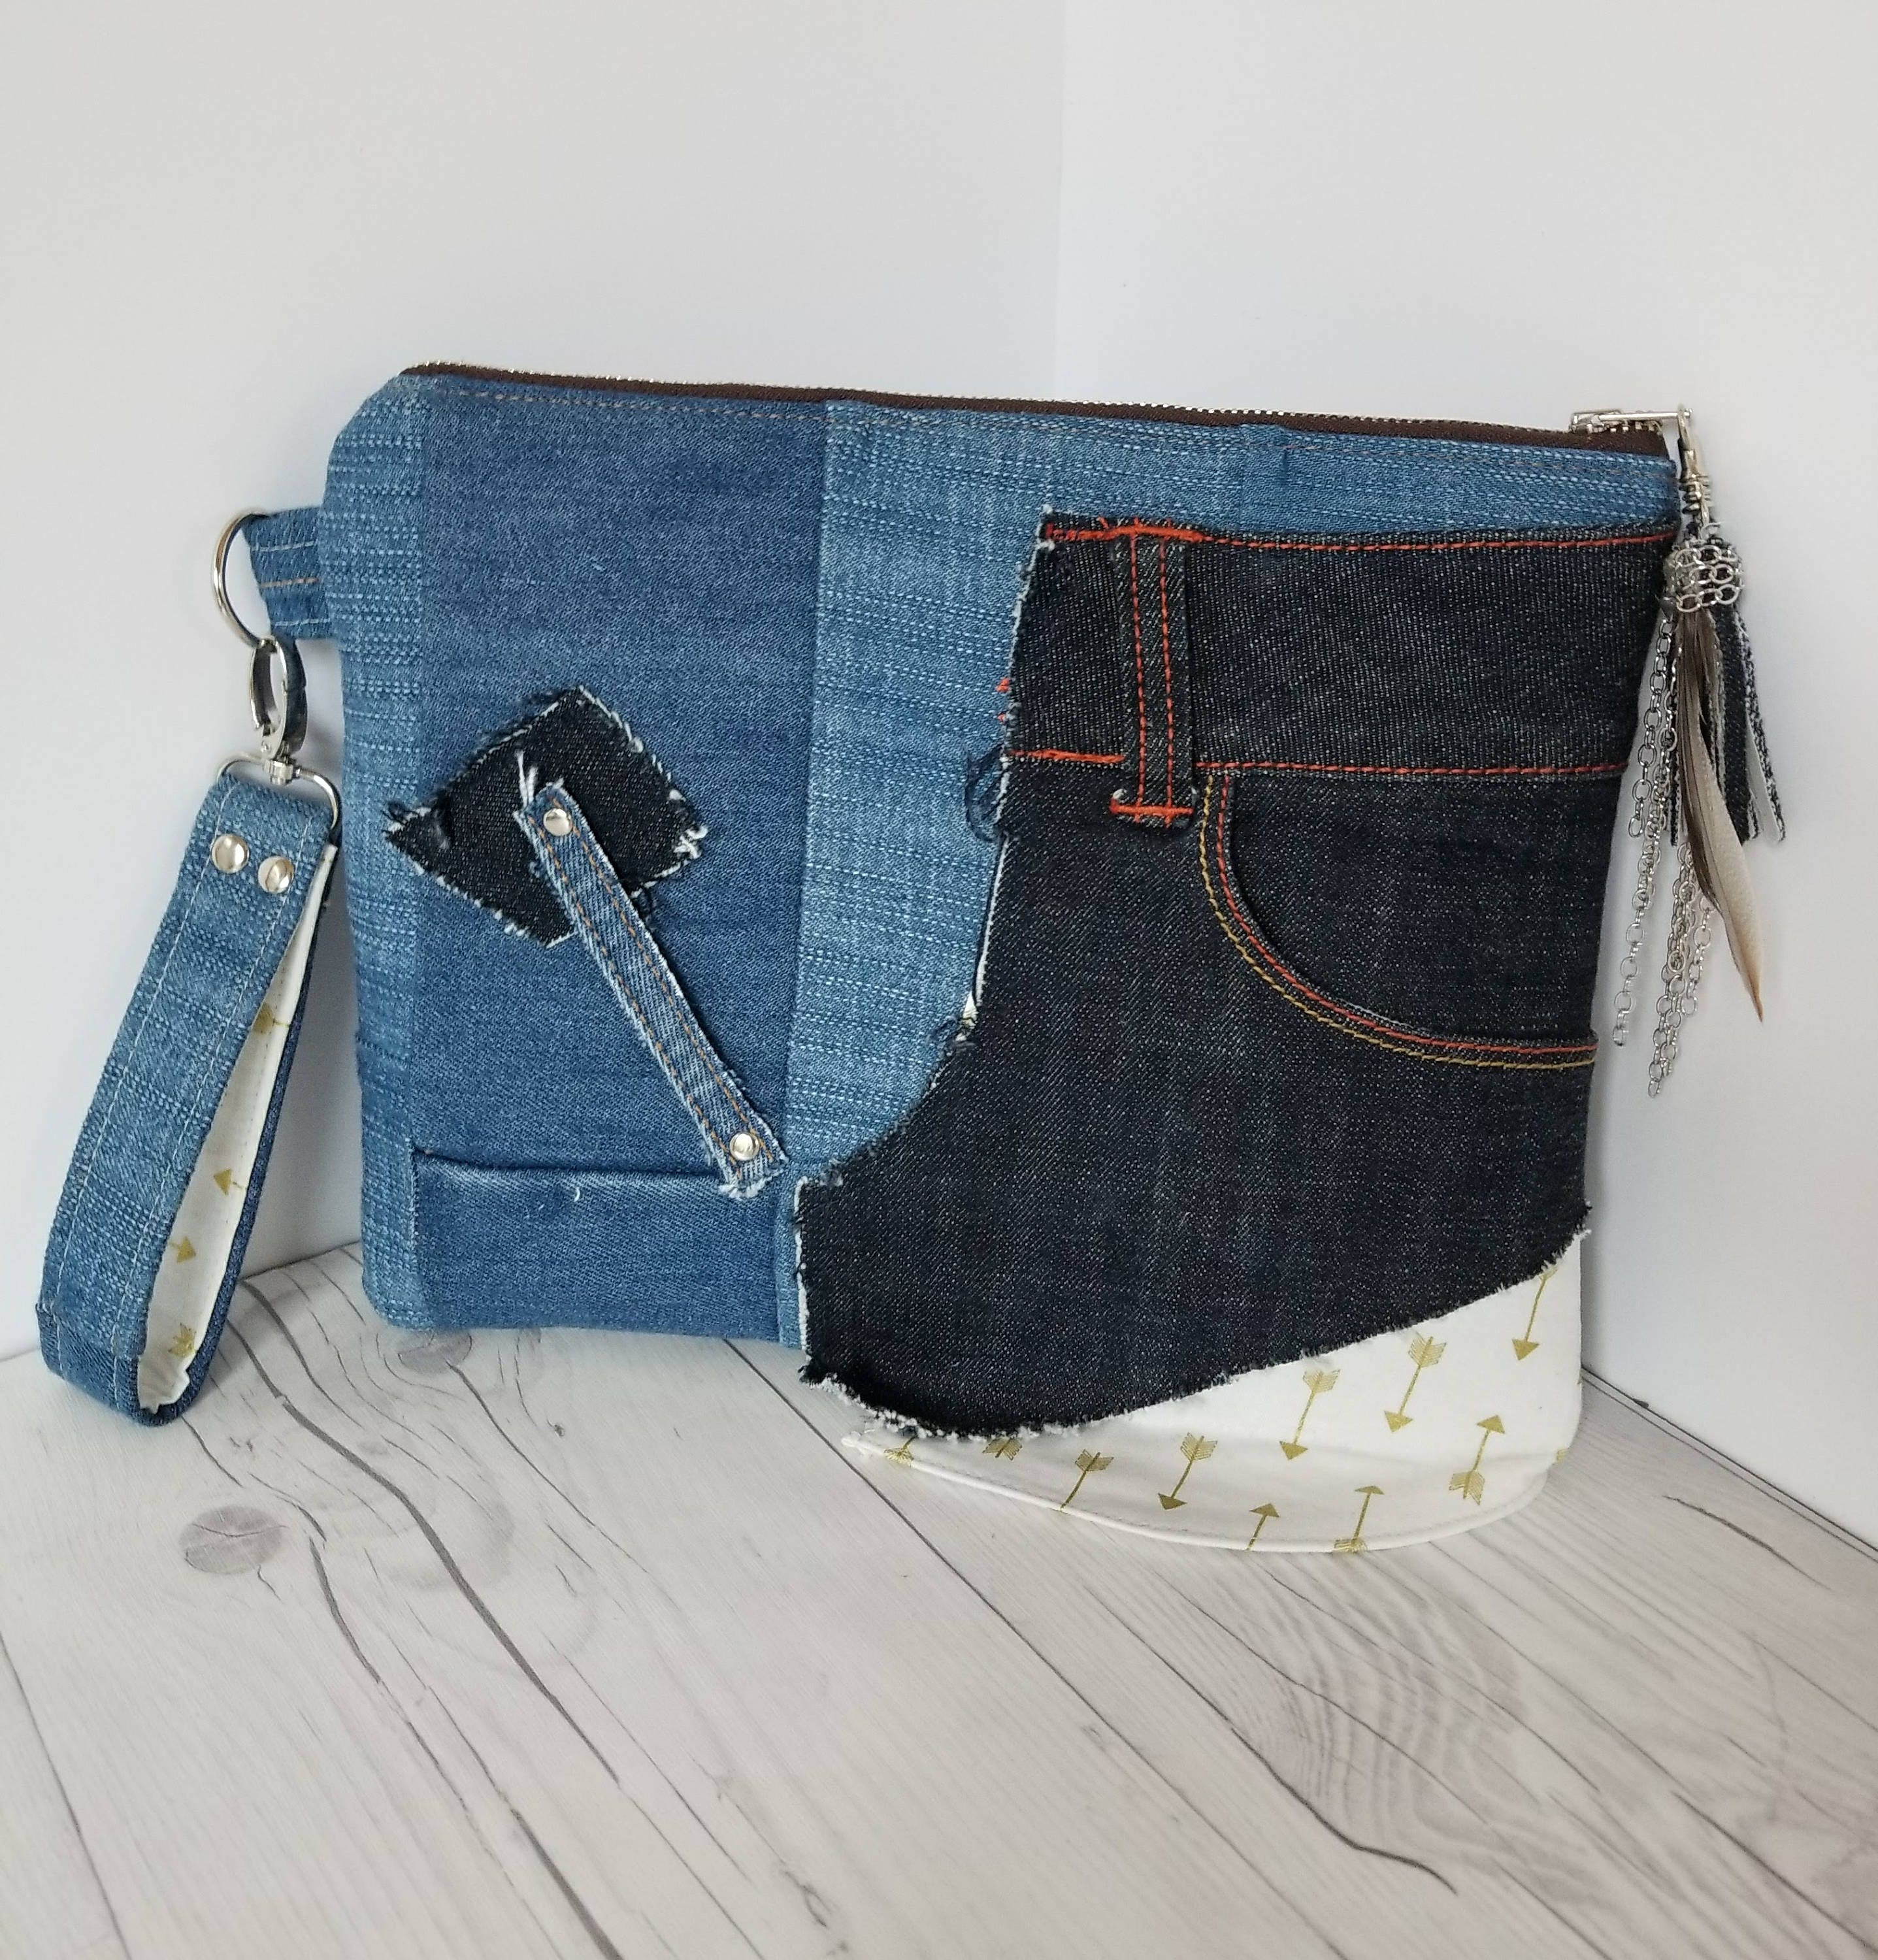 Bags | Teal Blue Furry Clutch Bag Purse Imperfect | Poshmark